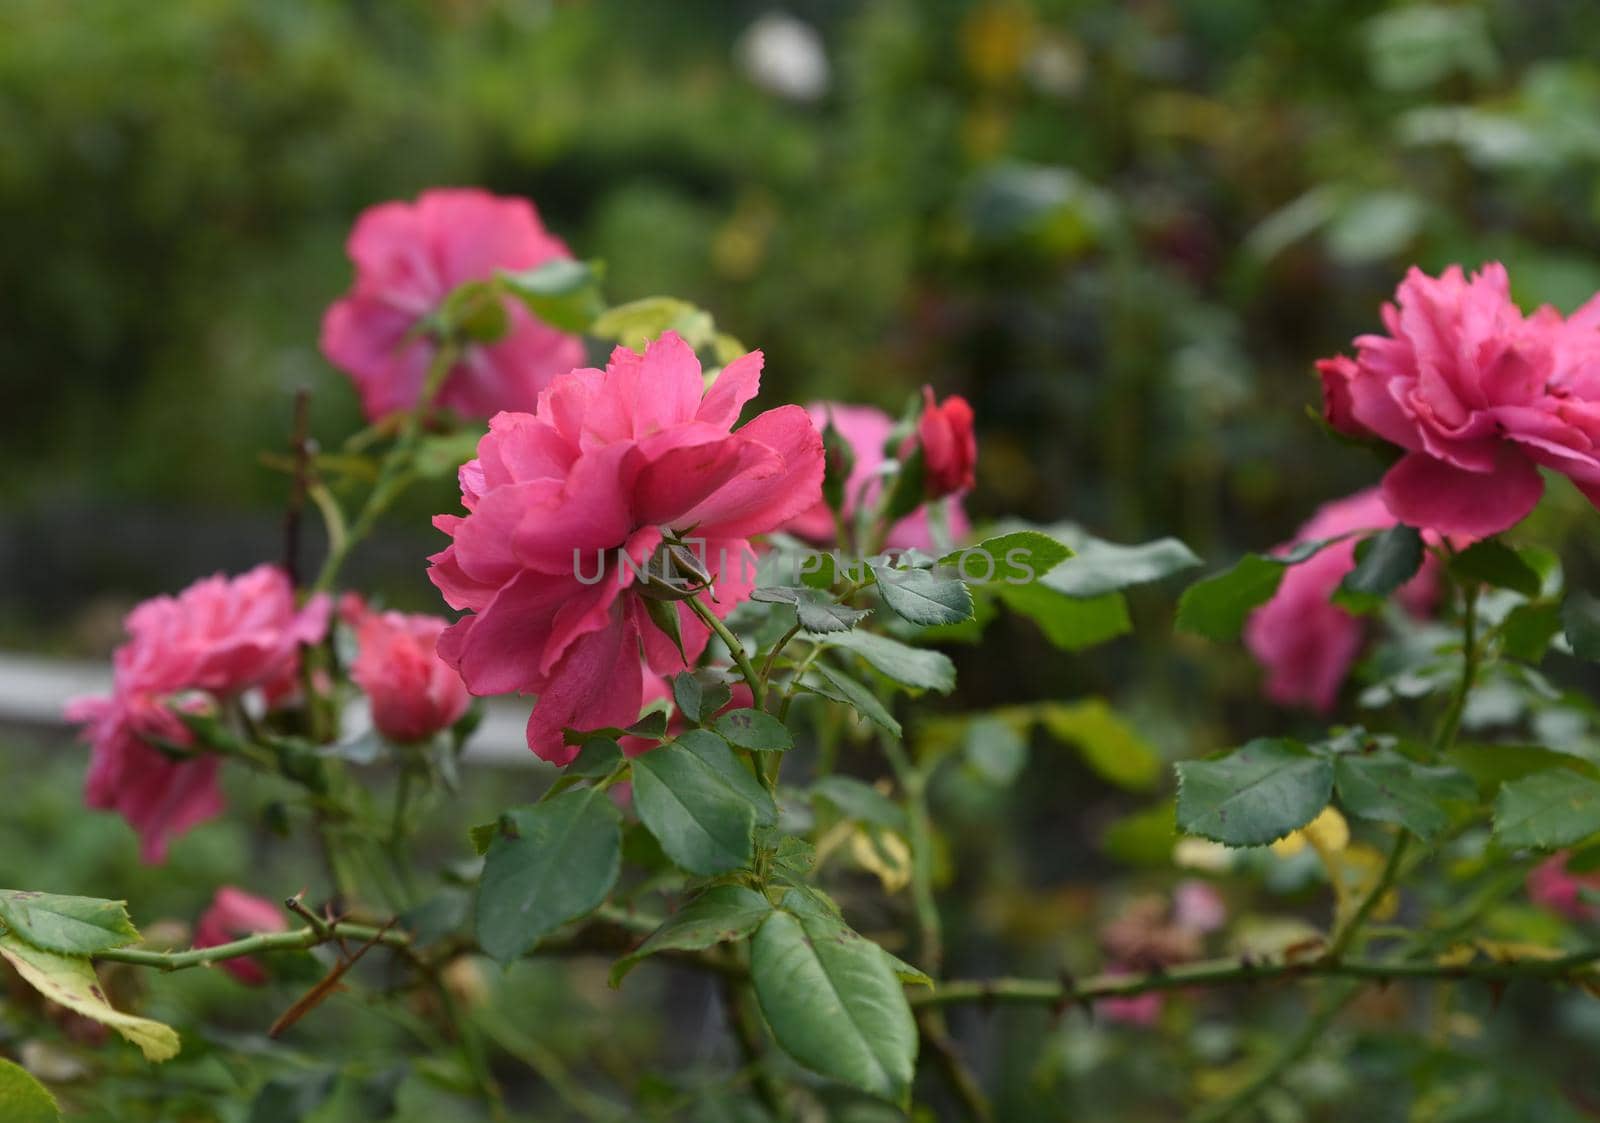 Rose bush in the old garden by sergey_mikhailov